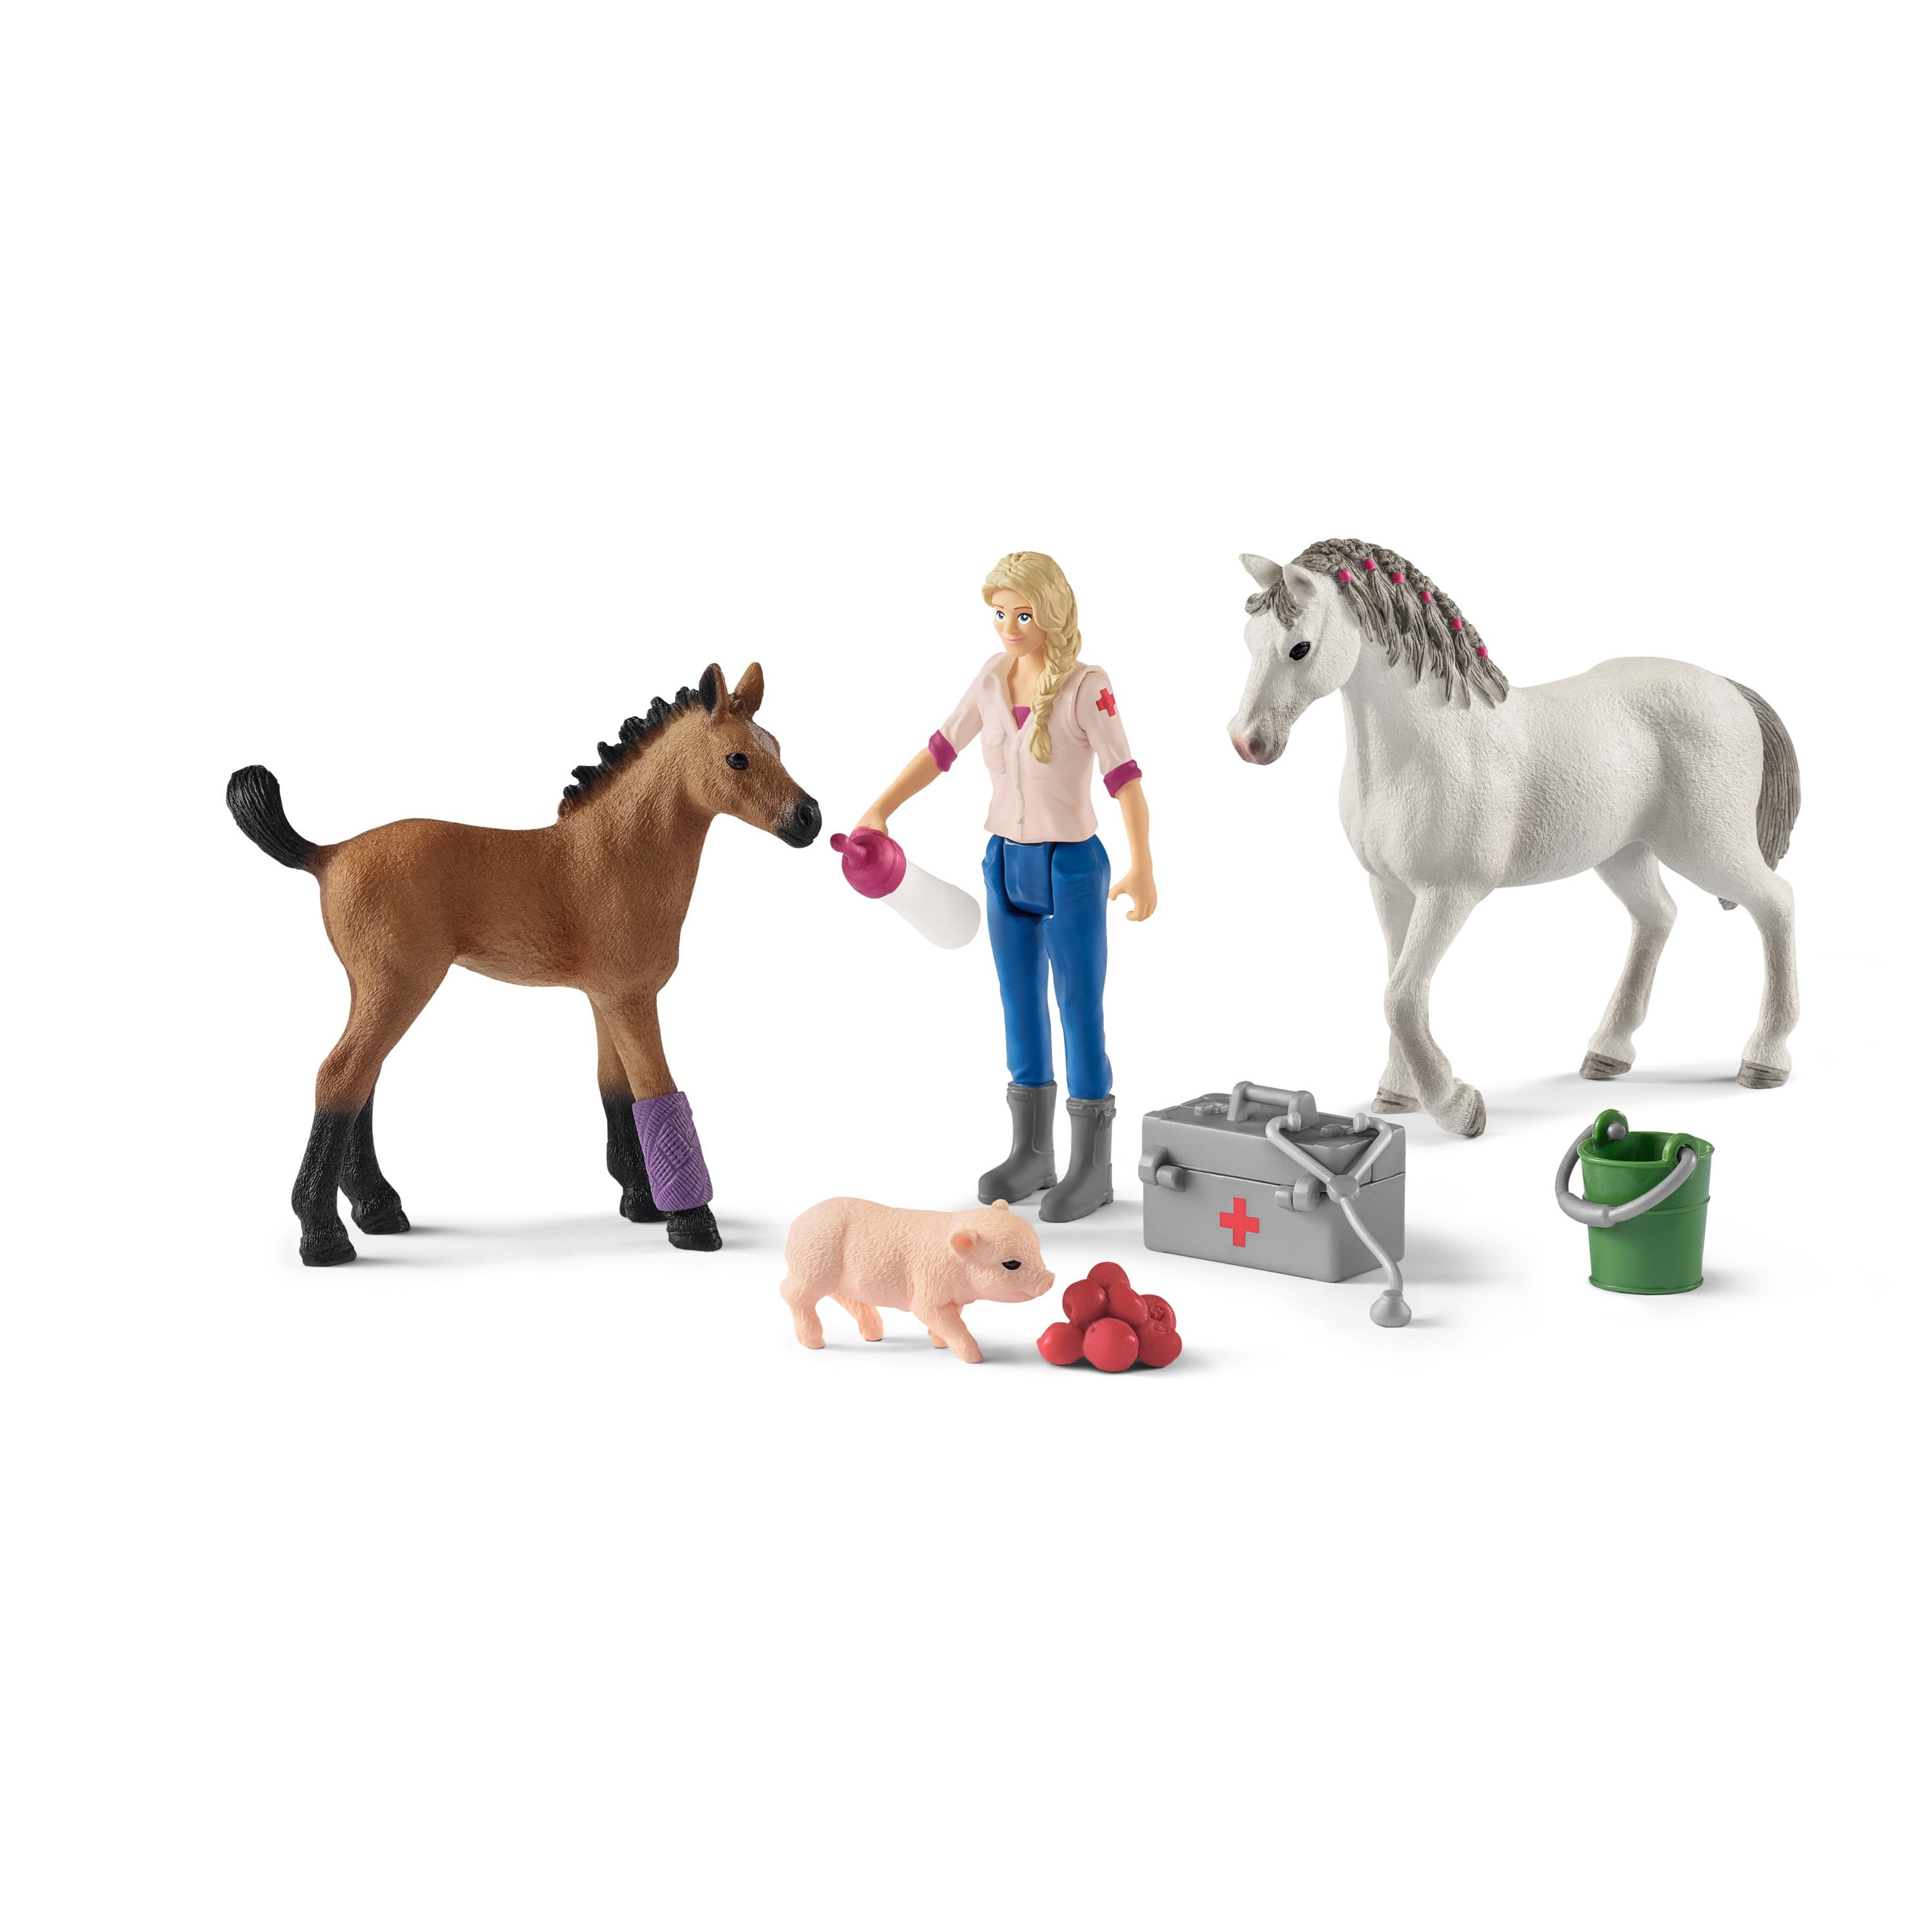 Schleich MIA'S VAULTING SET plastic toy farm pet animal horse blanket cat fence 